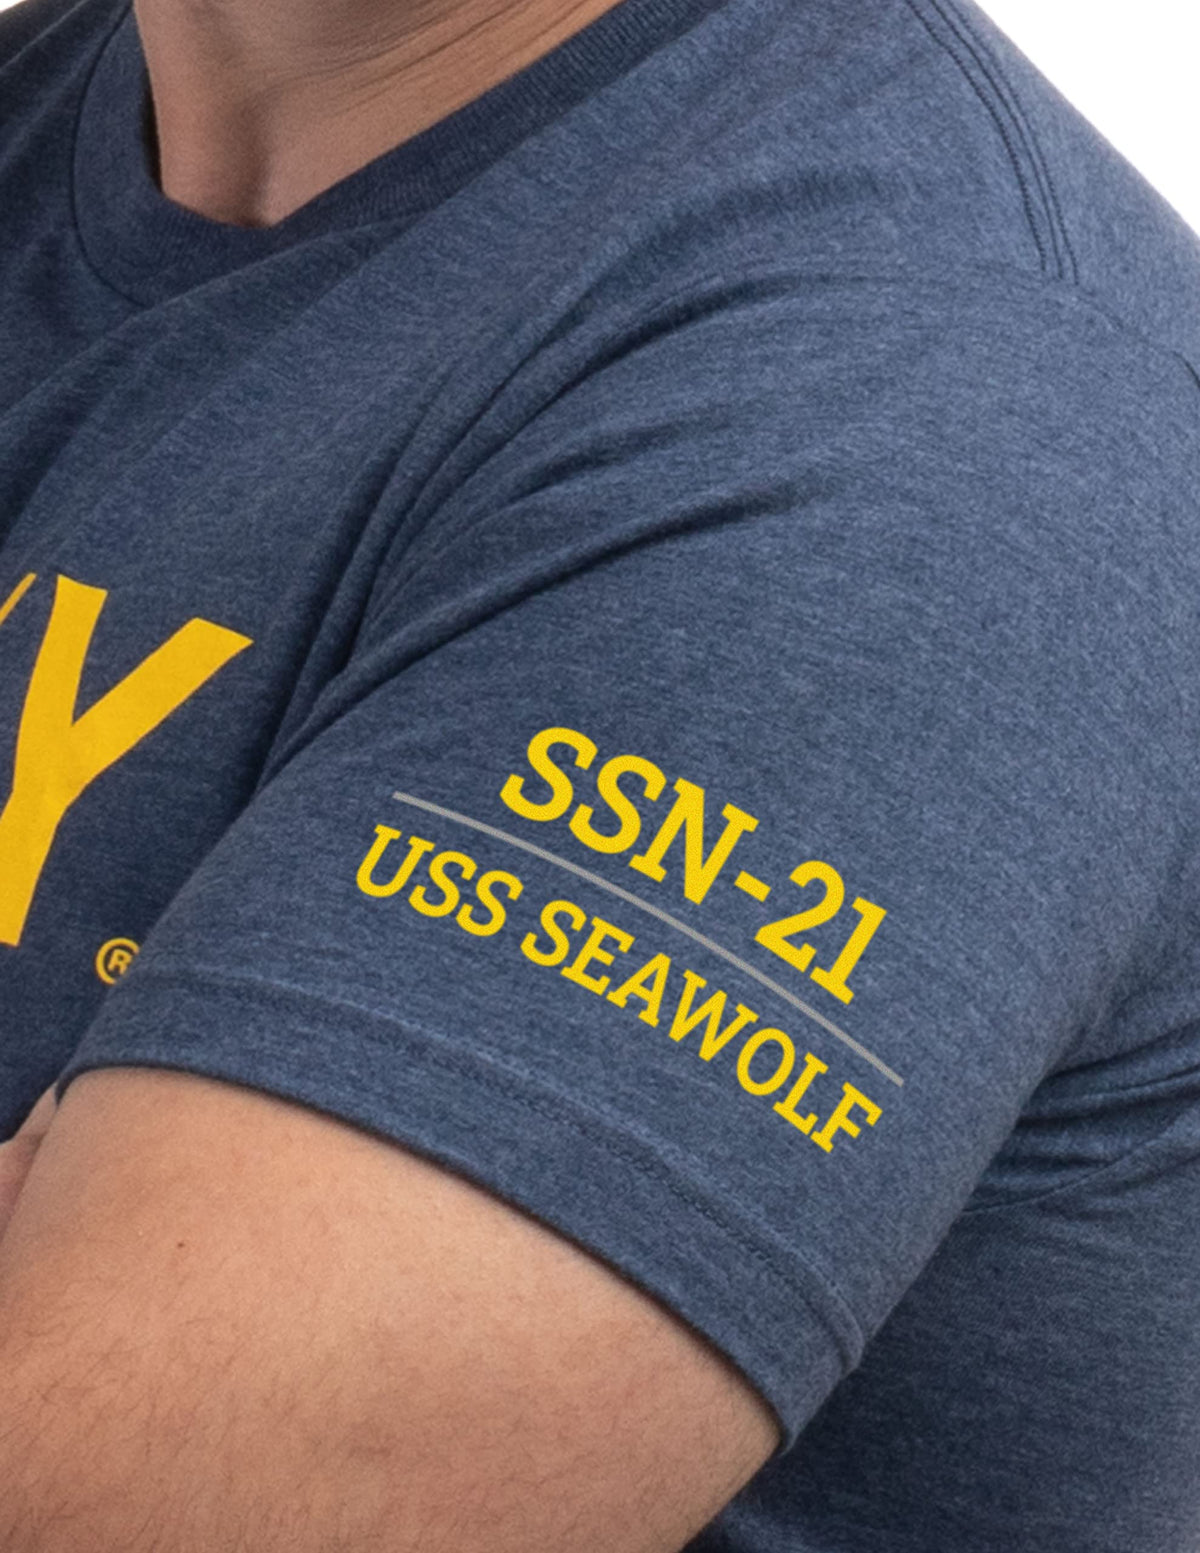 USS Seawolf, SSN-21 | U.S. Navy Sailor Veteran USN United States Naval T-shirt for Men Women